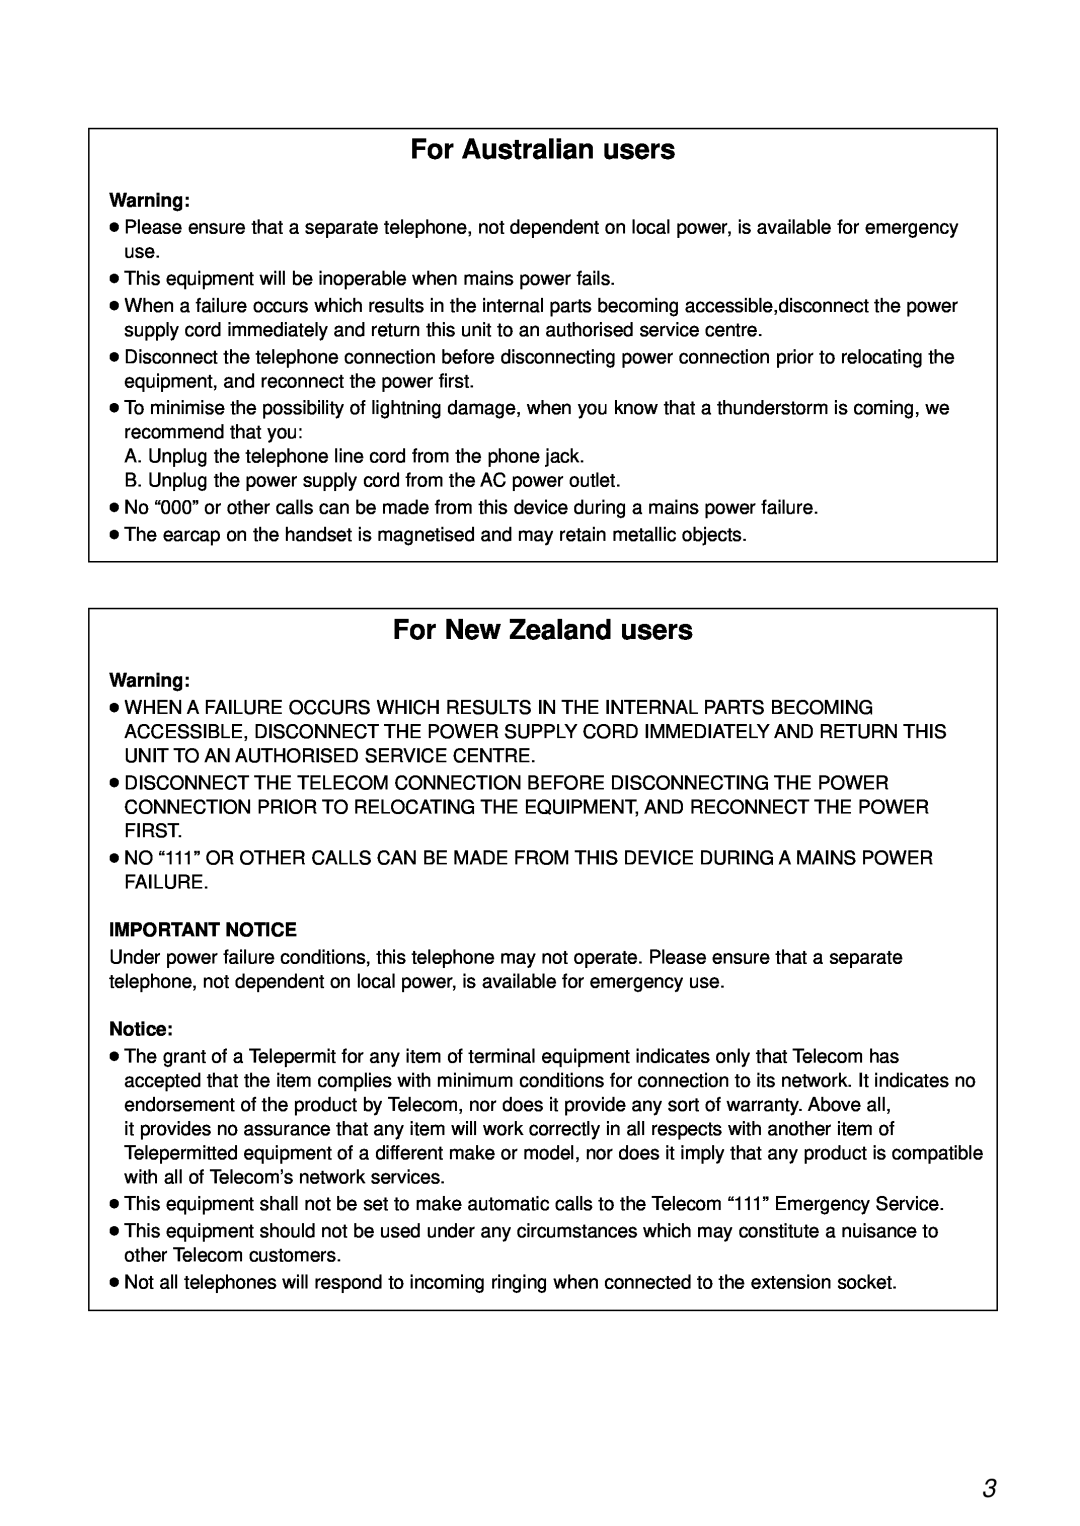 Panasonic KX-FL501NZ, KX-FL501AL manual For Australian users, For New Zealand users, Important Notice 